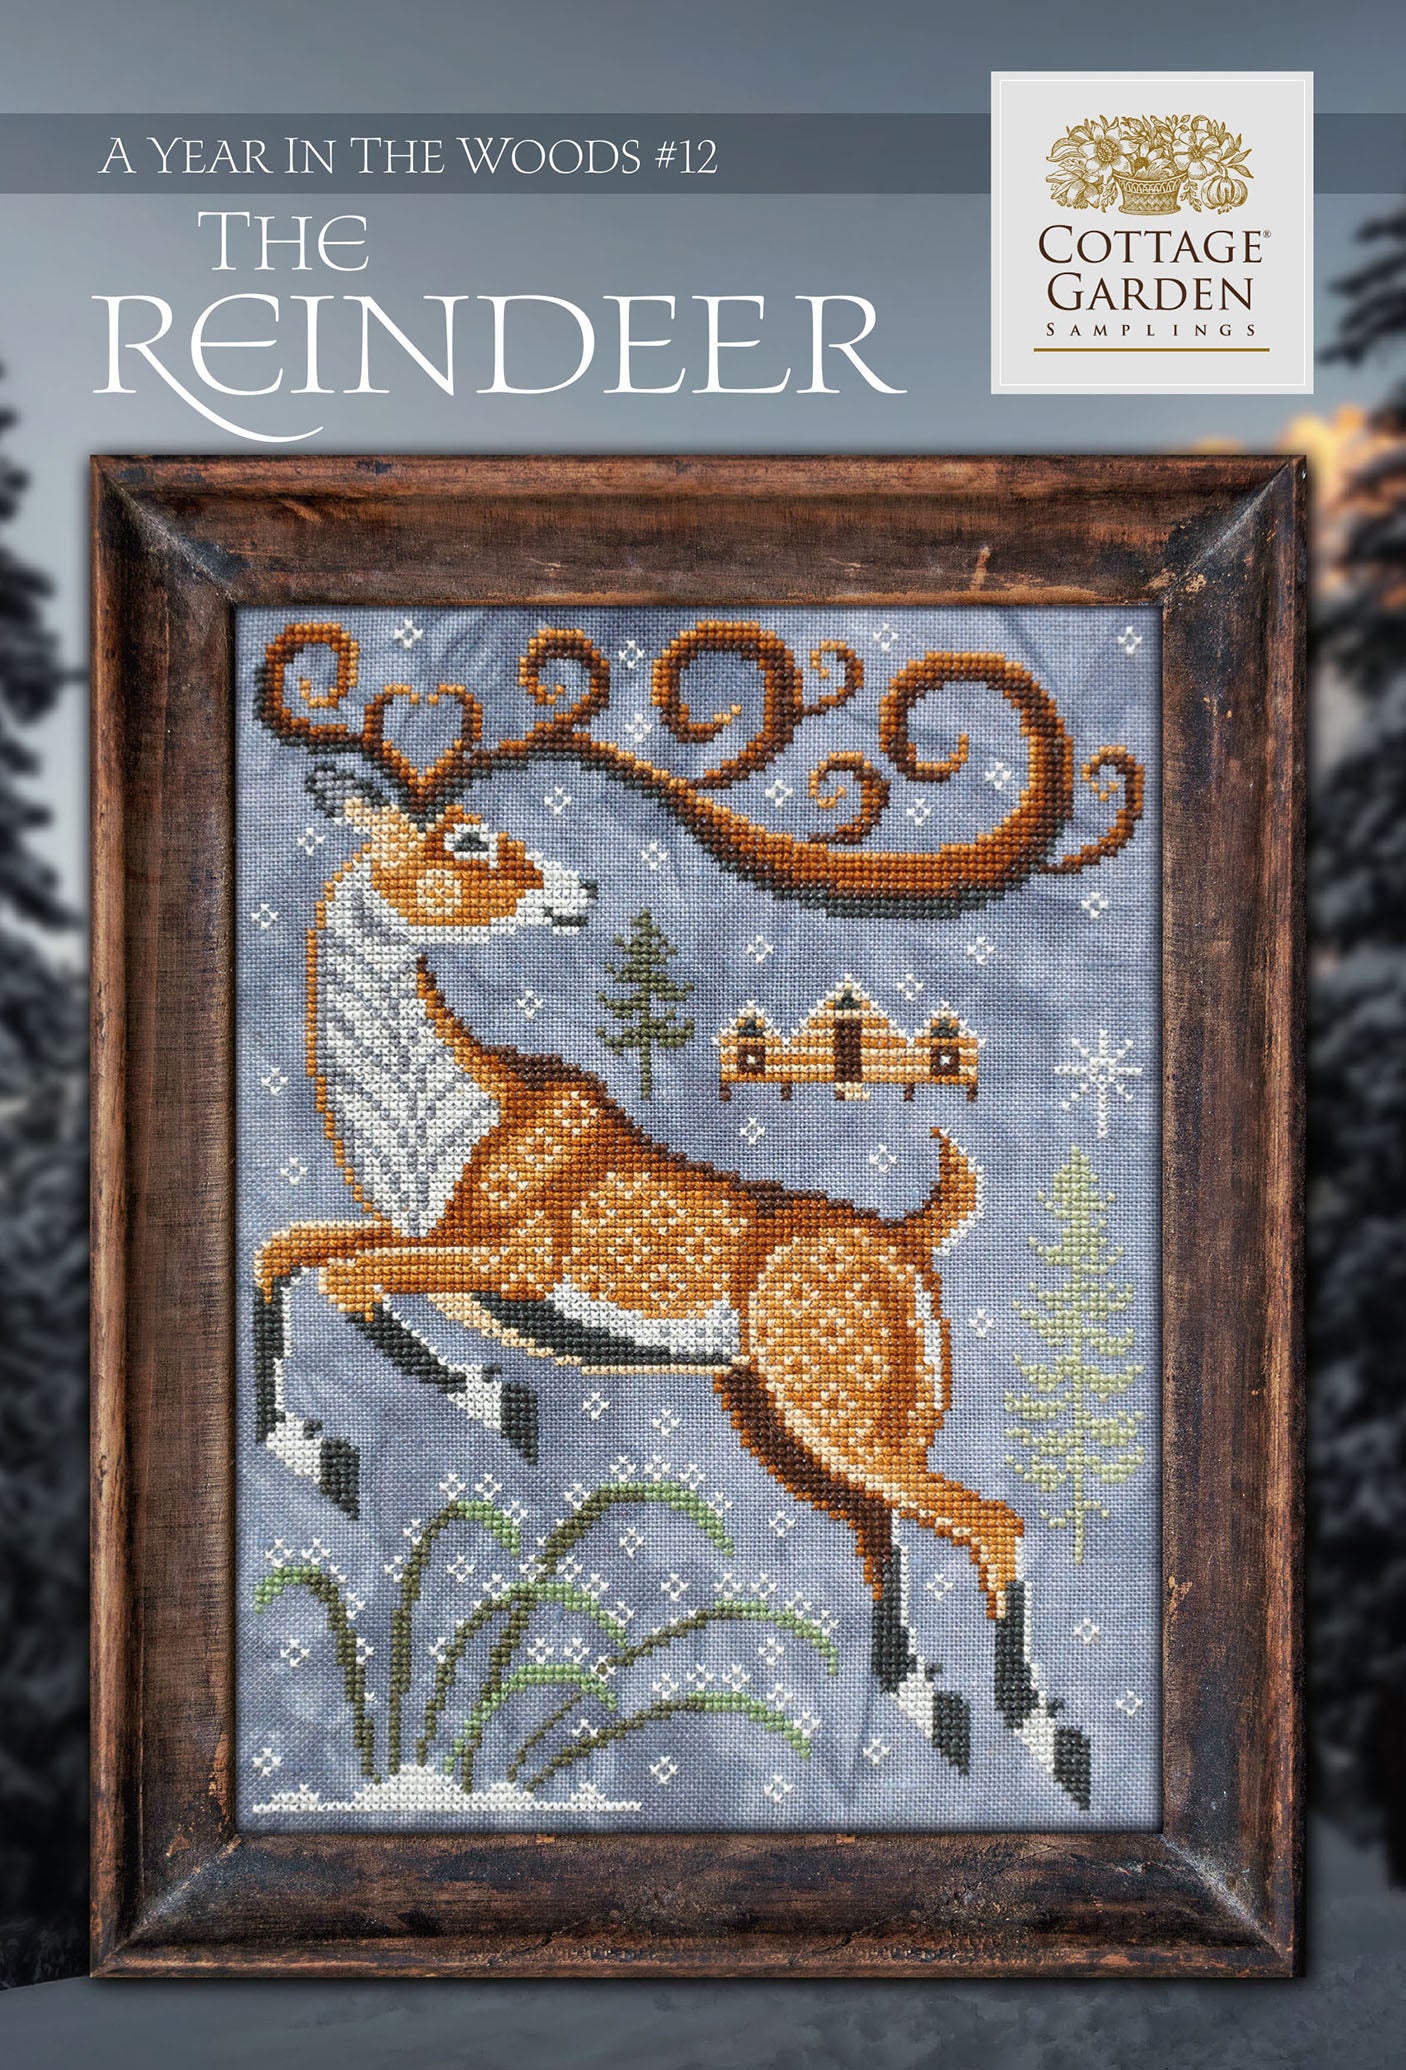 The Reindeer by Cottage Garden Samplings